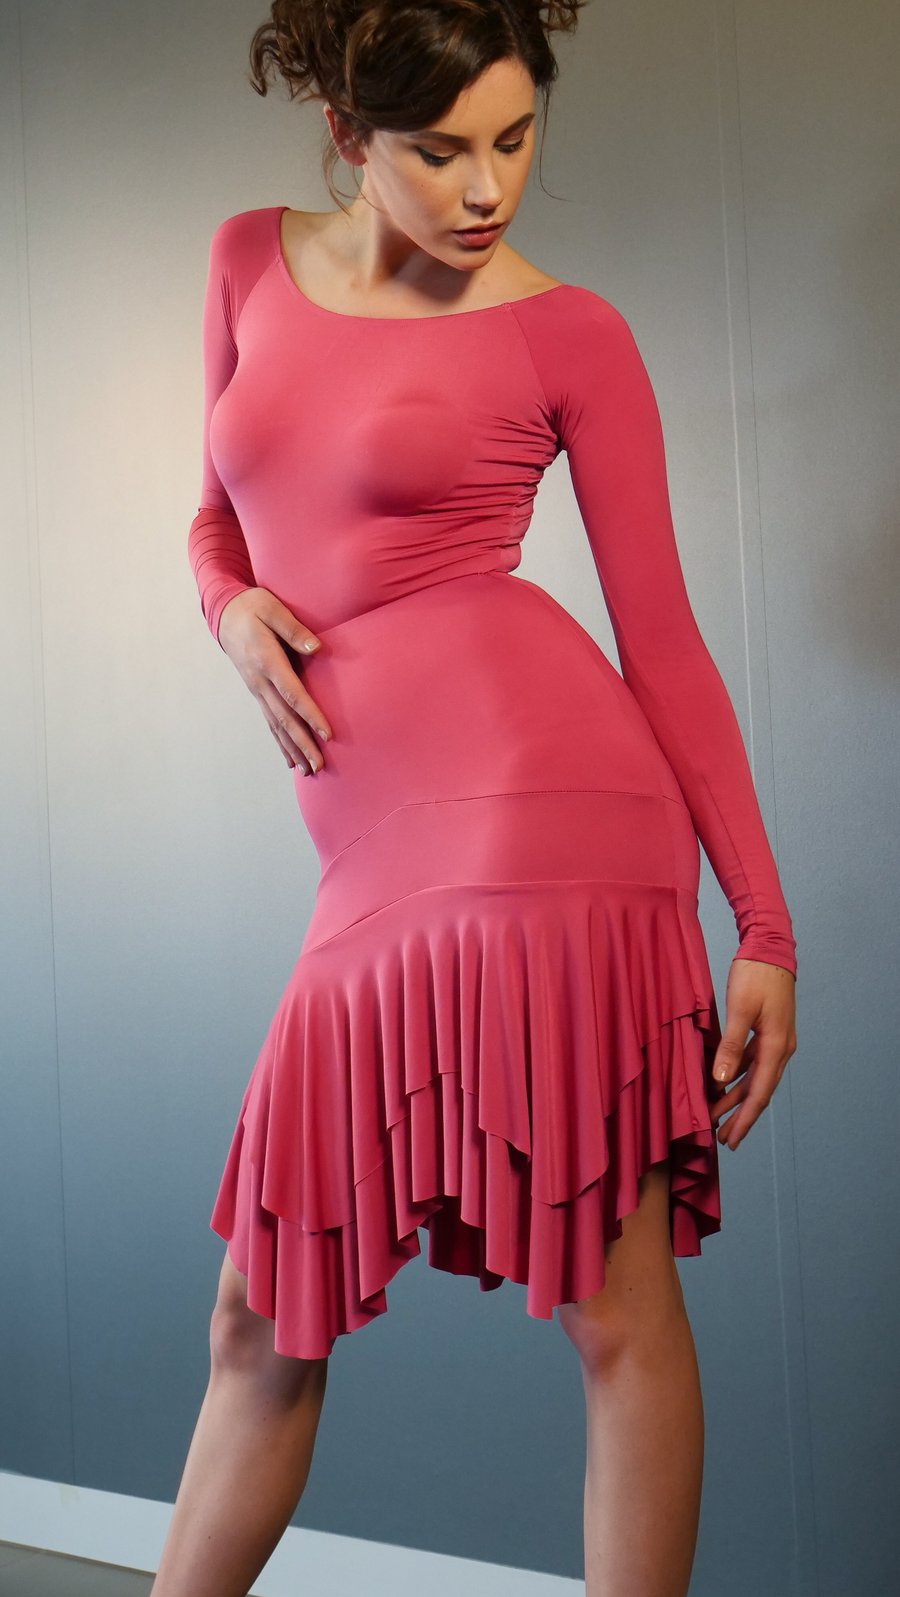 Image of Salsa Skirt - Fuchsia J3347 Dancewear latin ballroom